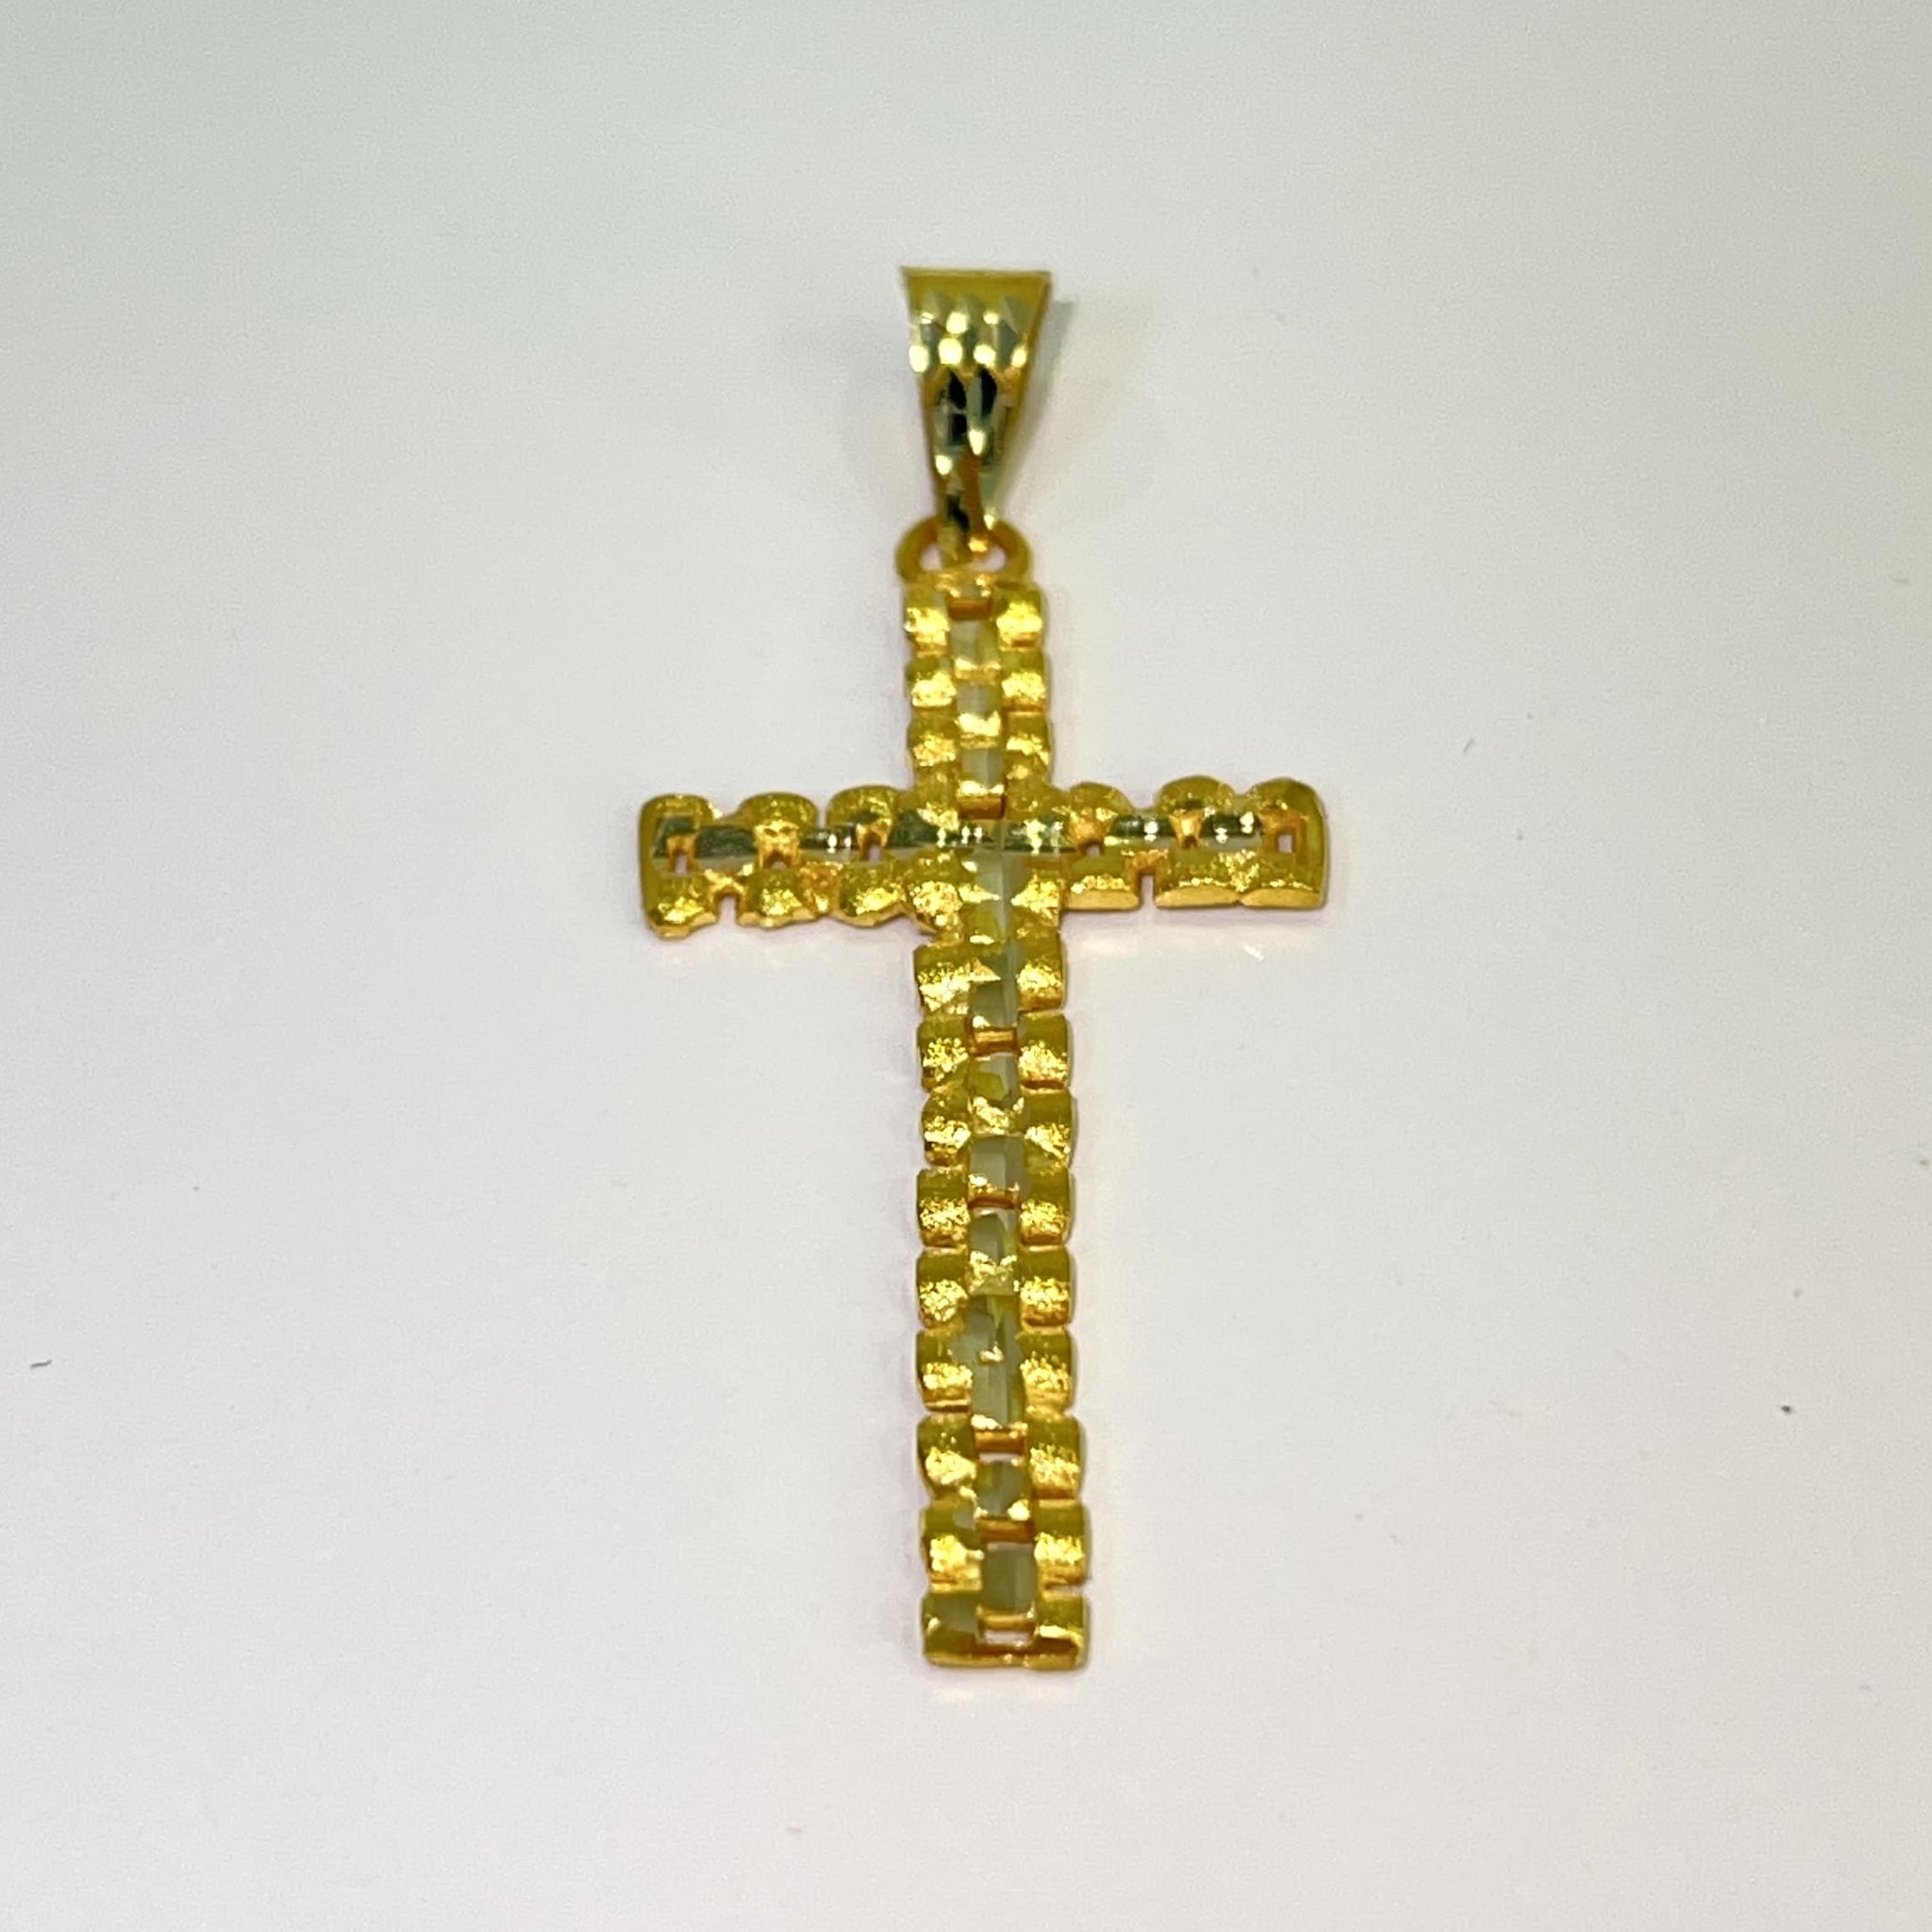 Cross Pendant Rolex Link - 14 Carat Gold - 279